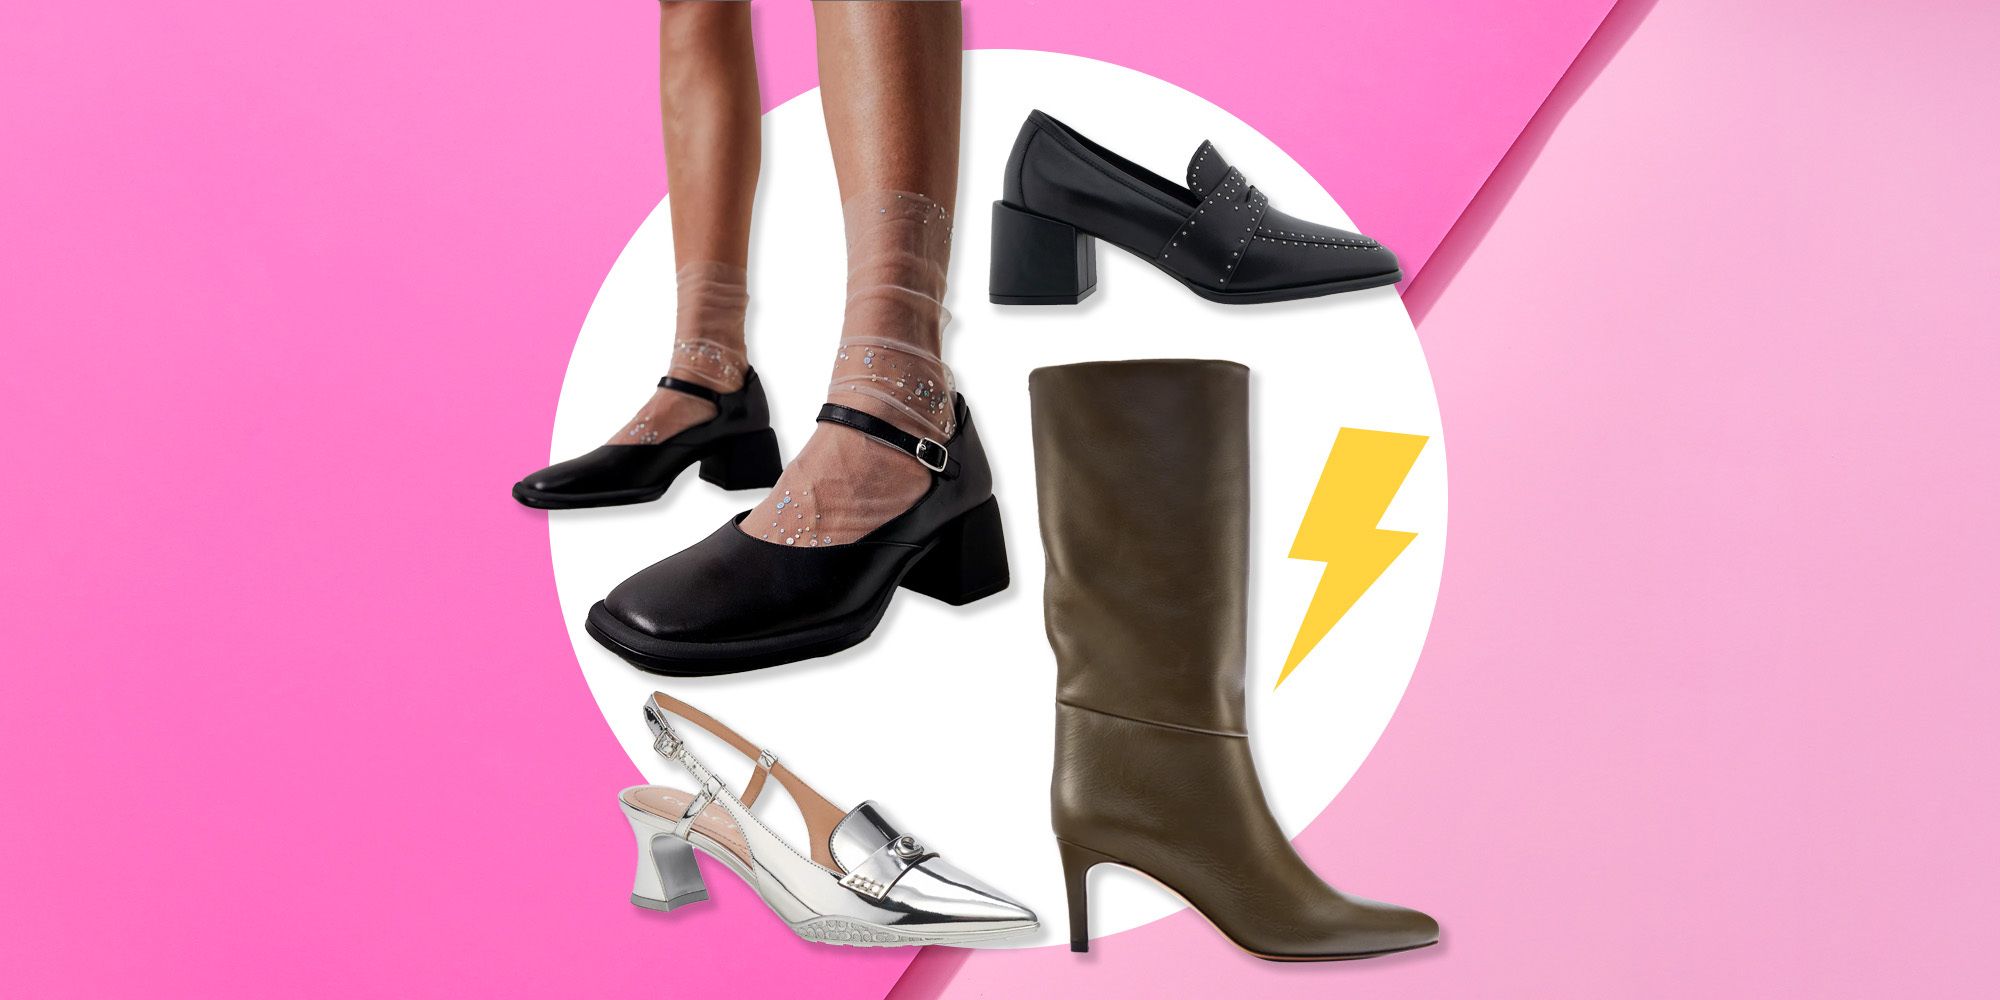 Sex, power, oppression: why women wear high heels | Fashion | The Guardian